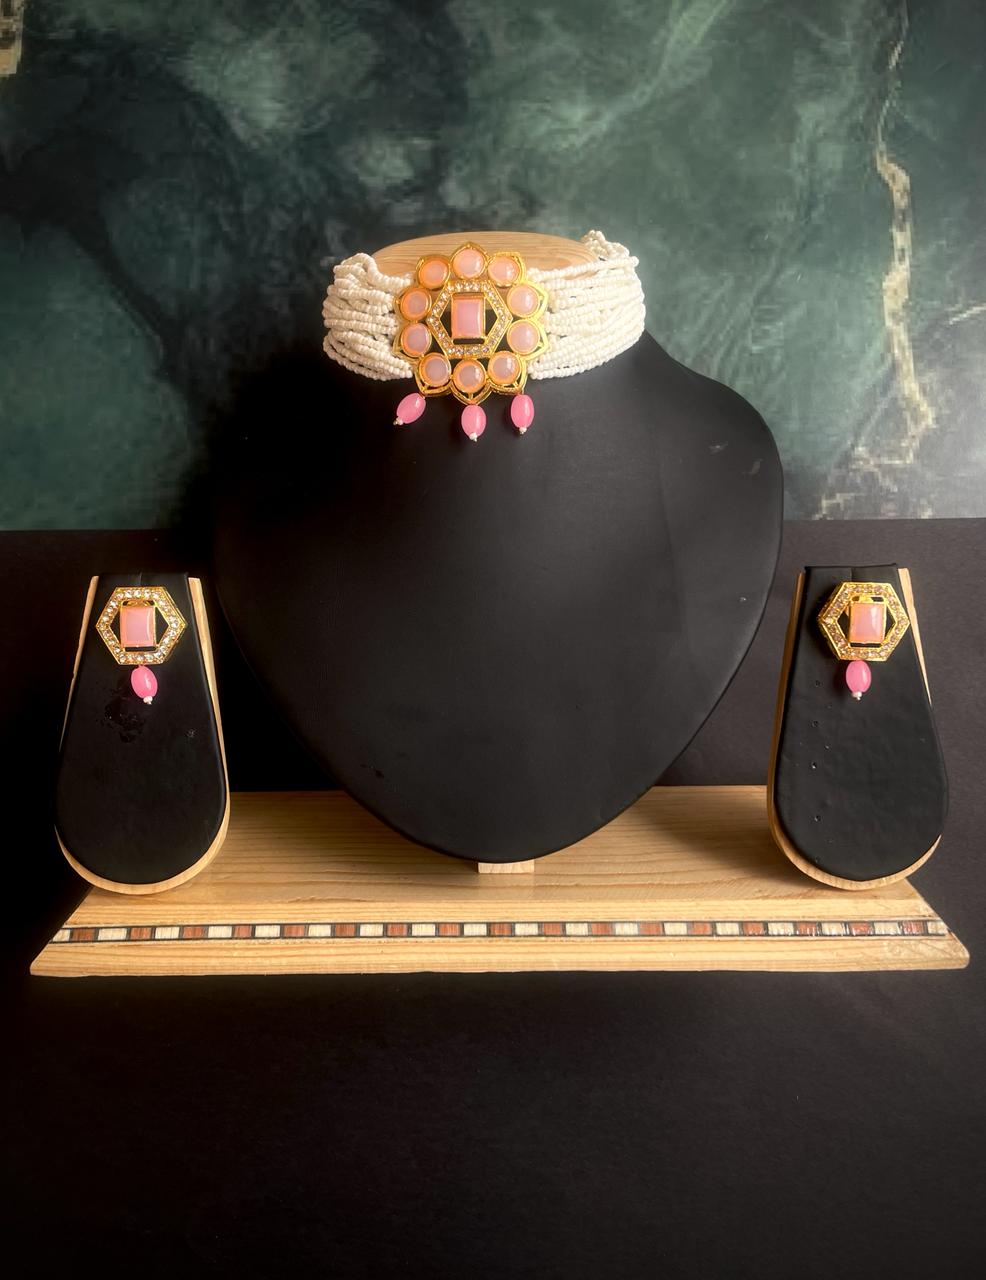 Monalisa Stone Golden Choker with Earring Set